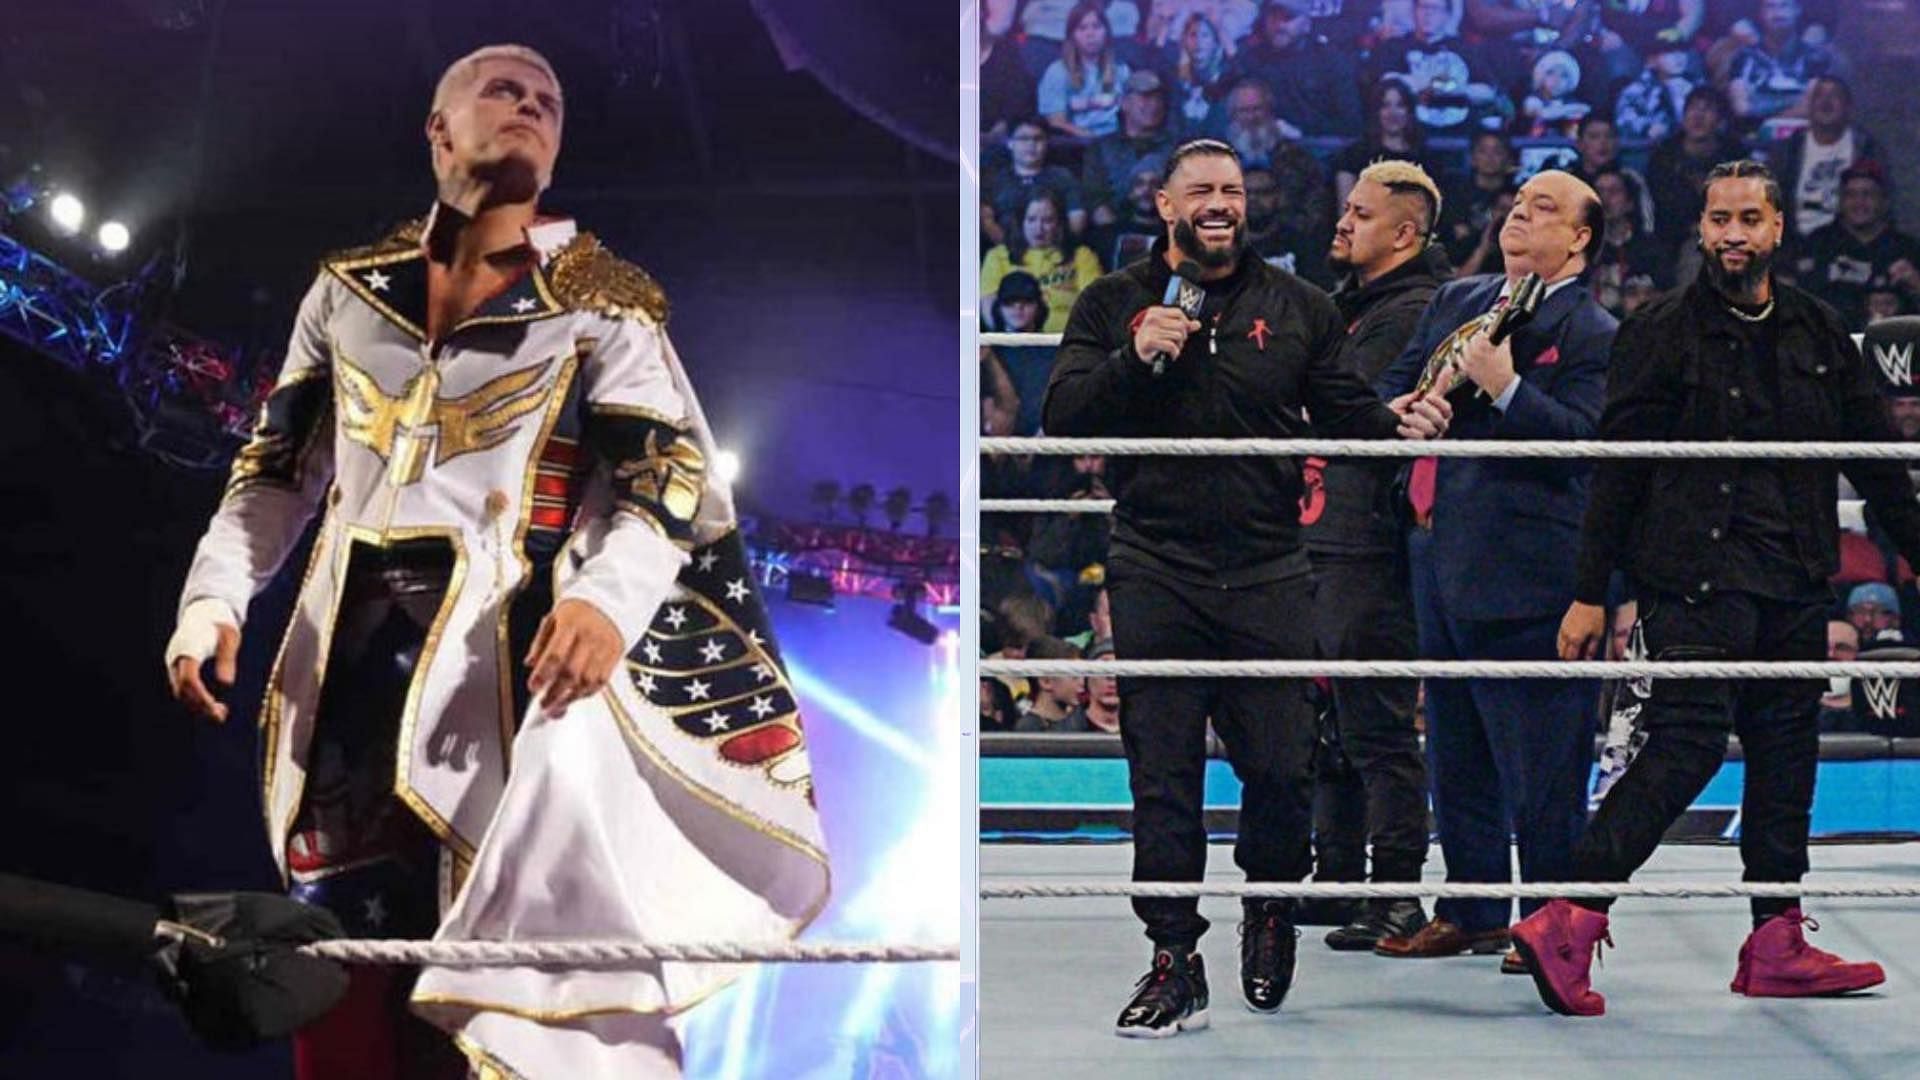 Cody Rhodes will face Roman Reigns at WrestleMania XL